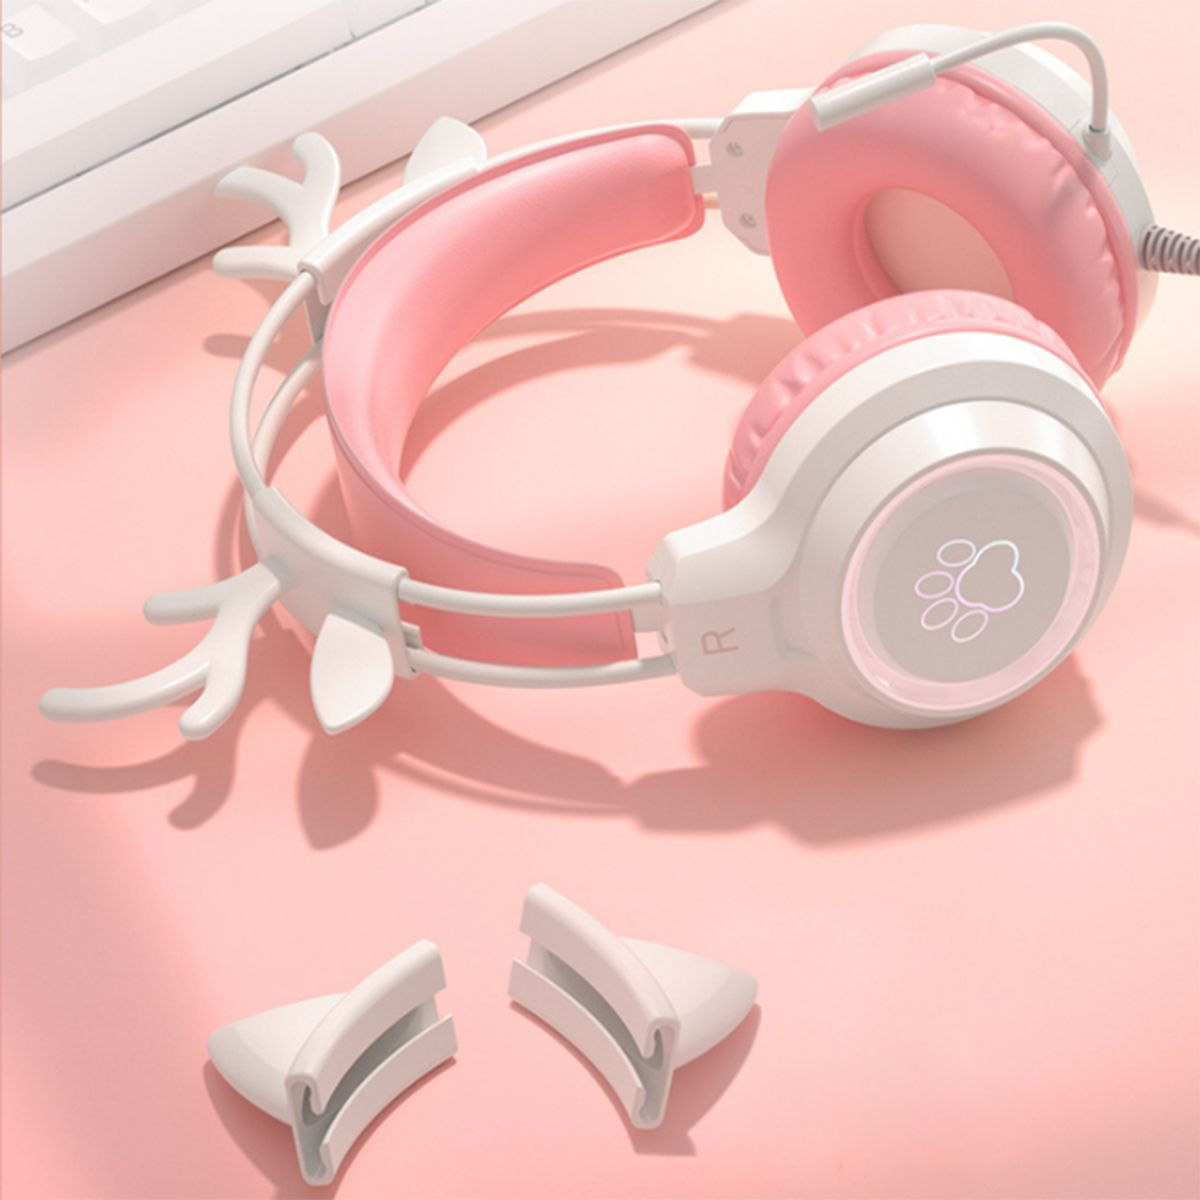 KINSI Headset,Gaming-Headset Kopfhörer mit Katzenohren,Geräuschunterdrückung rosa Over-ear Over-Ear-Kopfhörer